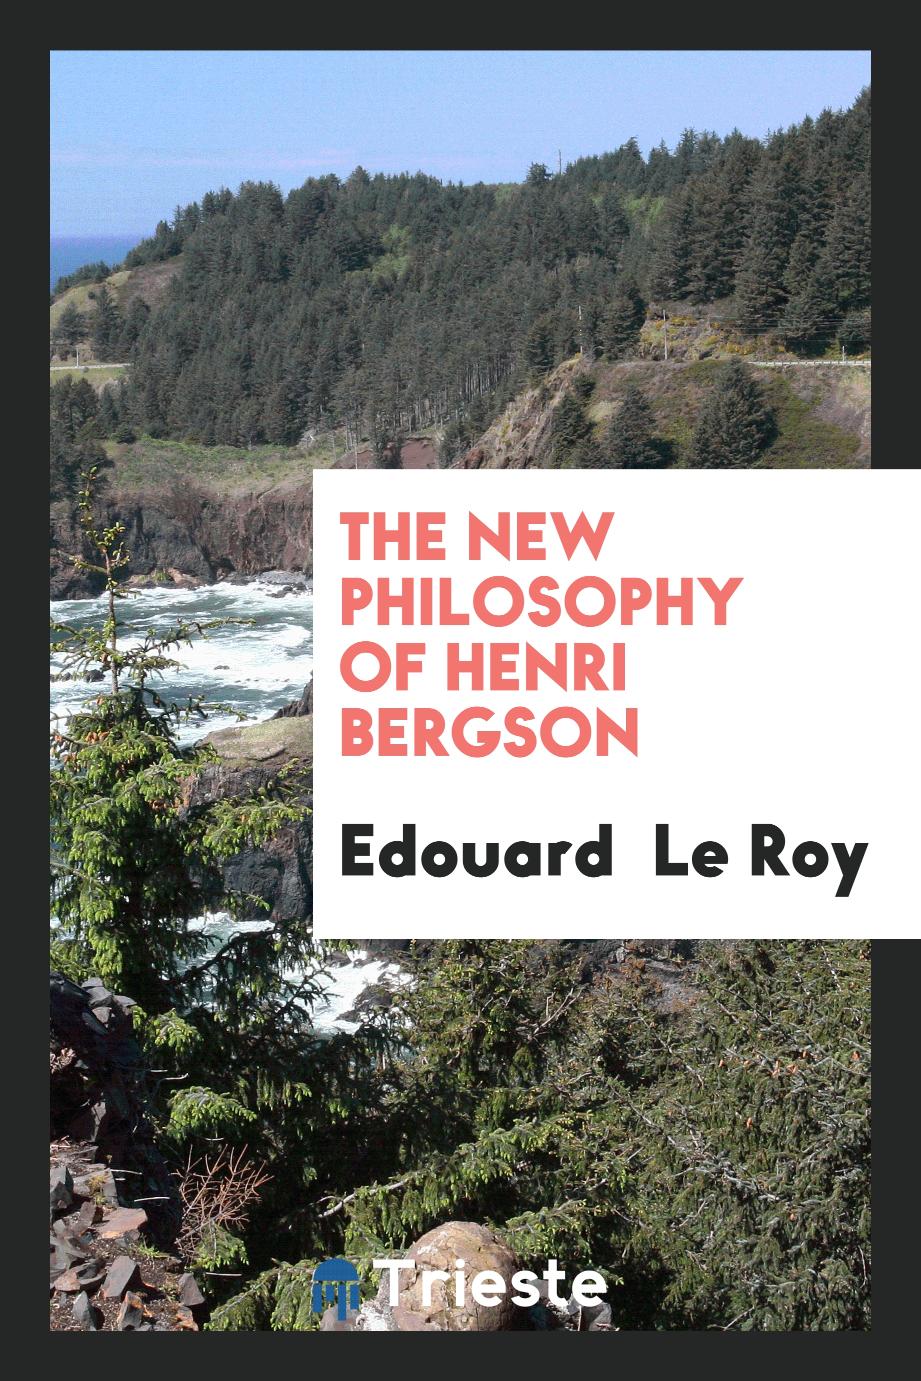 The new philosophy of Henri Bergson